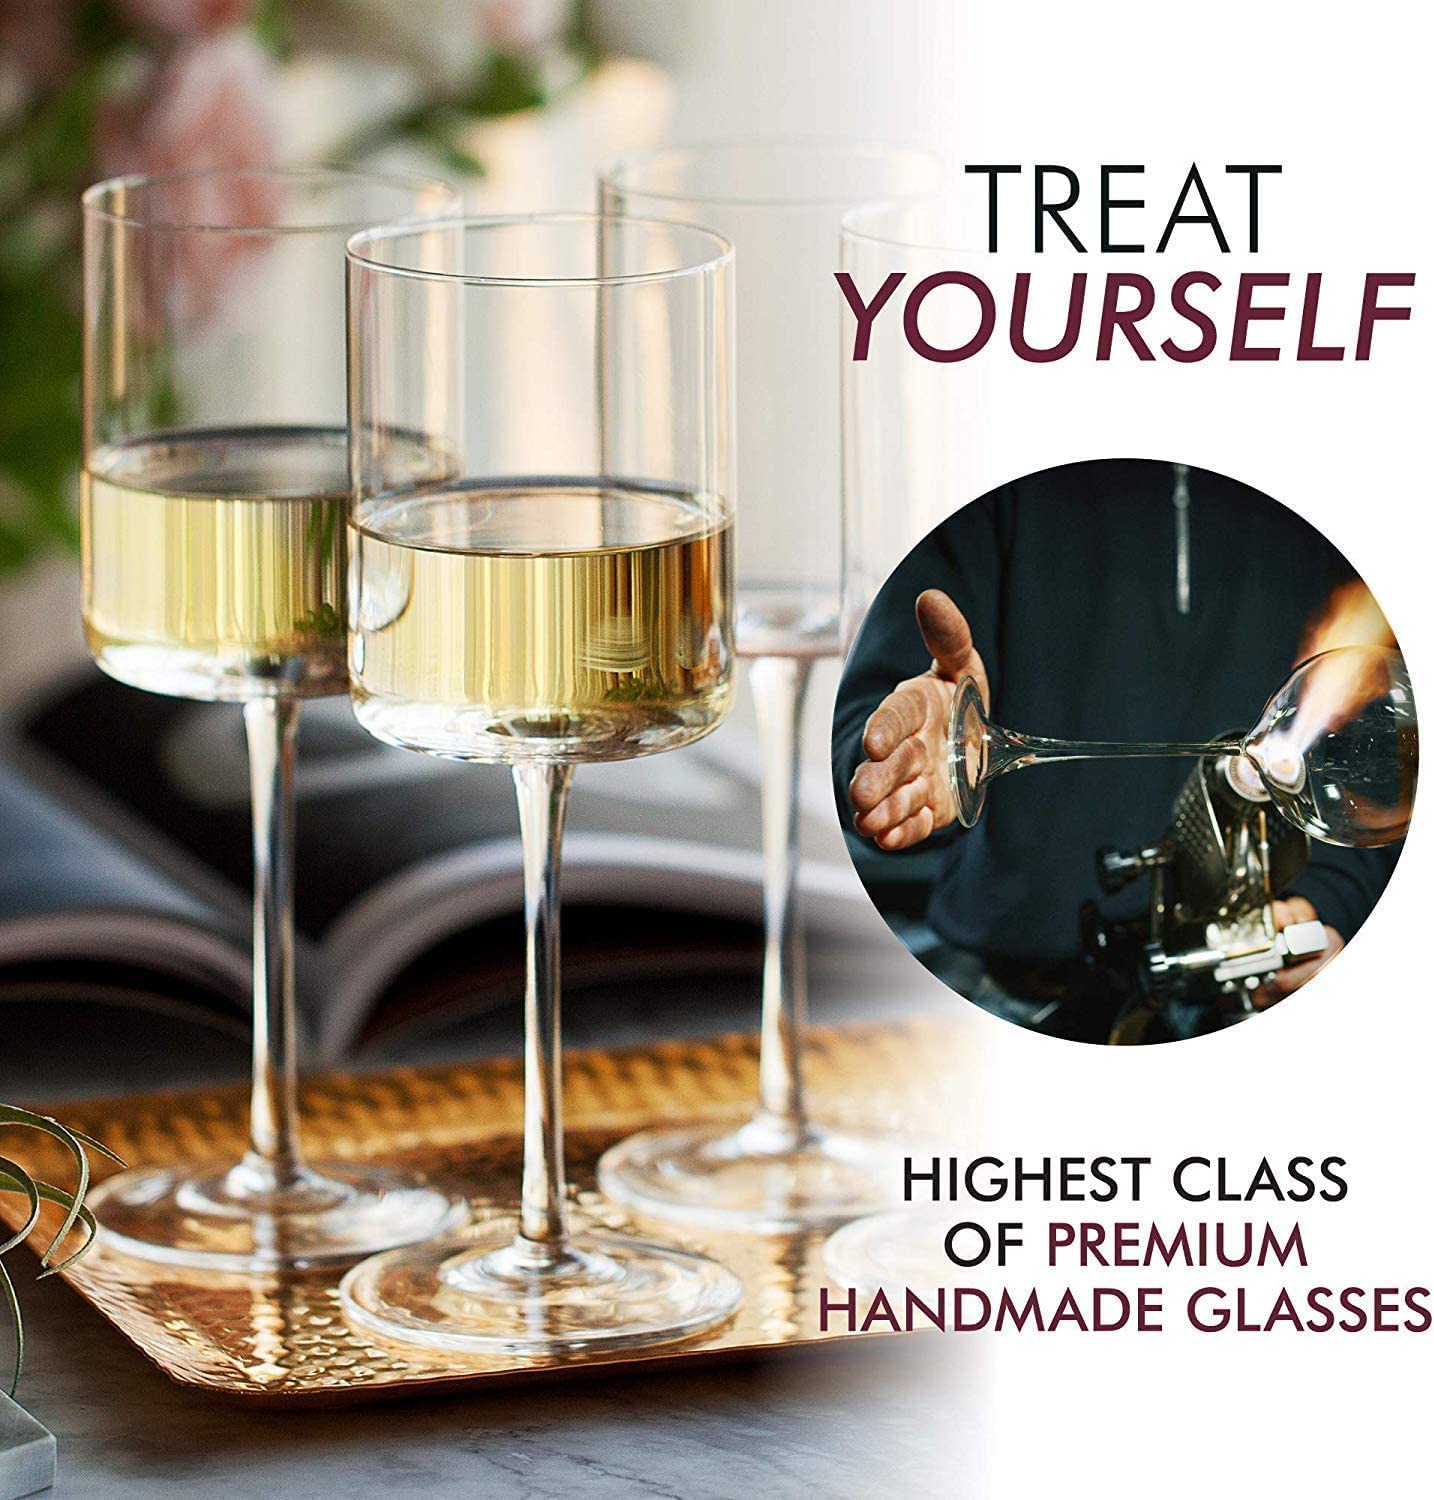 Square Wine Glasses Set of 4 - Crystal Wine Glasses 14oz in Gift Packa